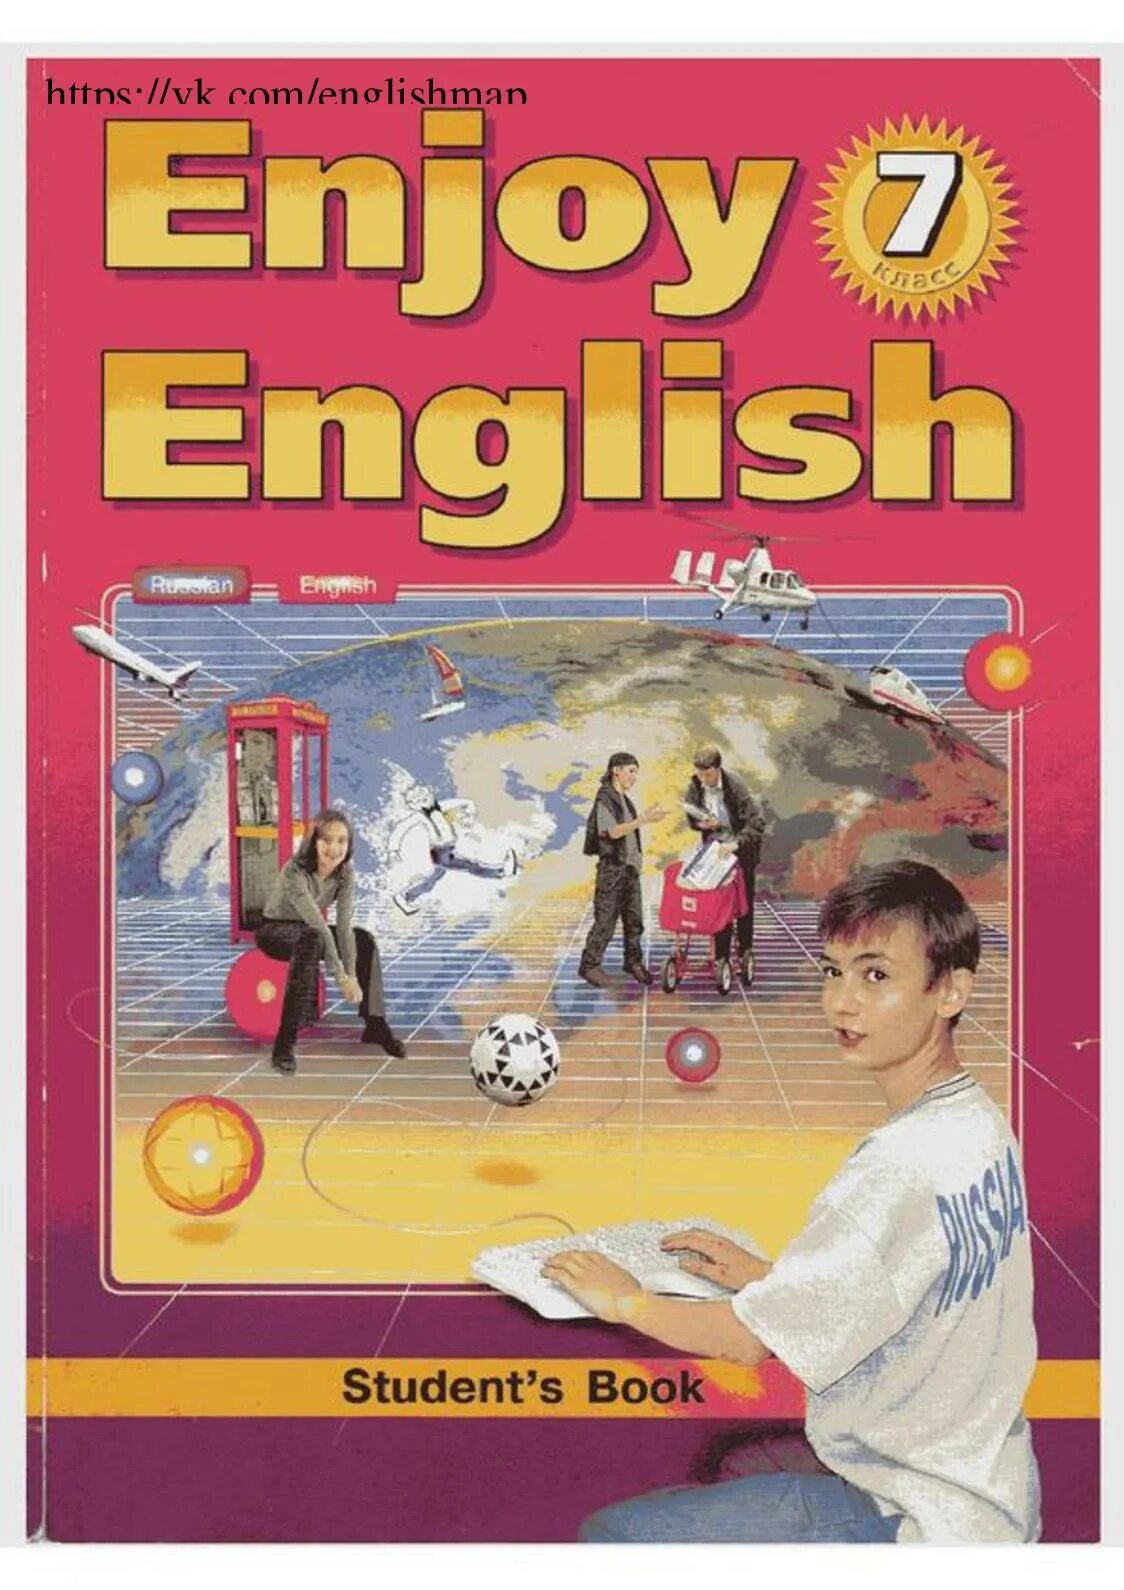 Student book 7 класс учебник. Enjoy English биболетова. Английский язык. Учебник. Английский язык 7 класс биболетова. Английский язык 7 класс учебник.